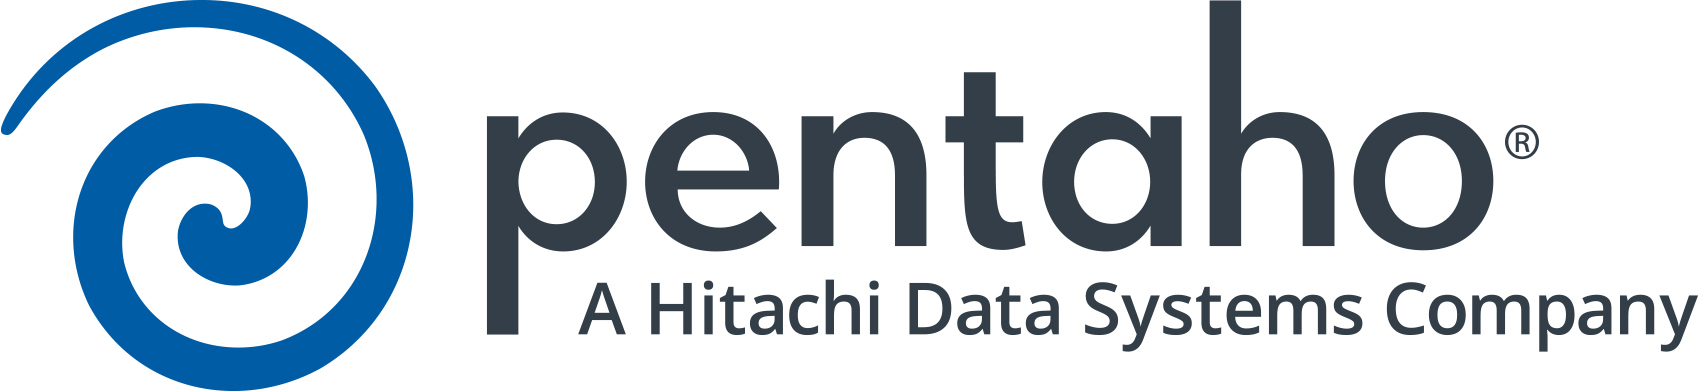 Hitachi schliesst Pentaho-Übernahme ab